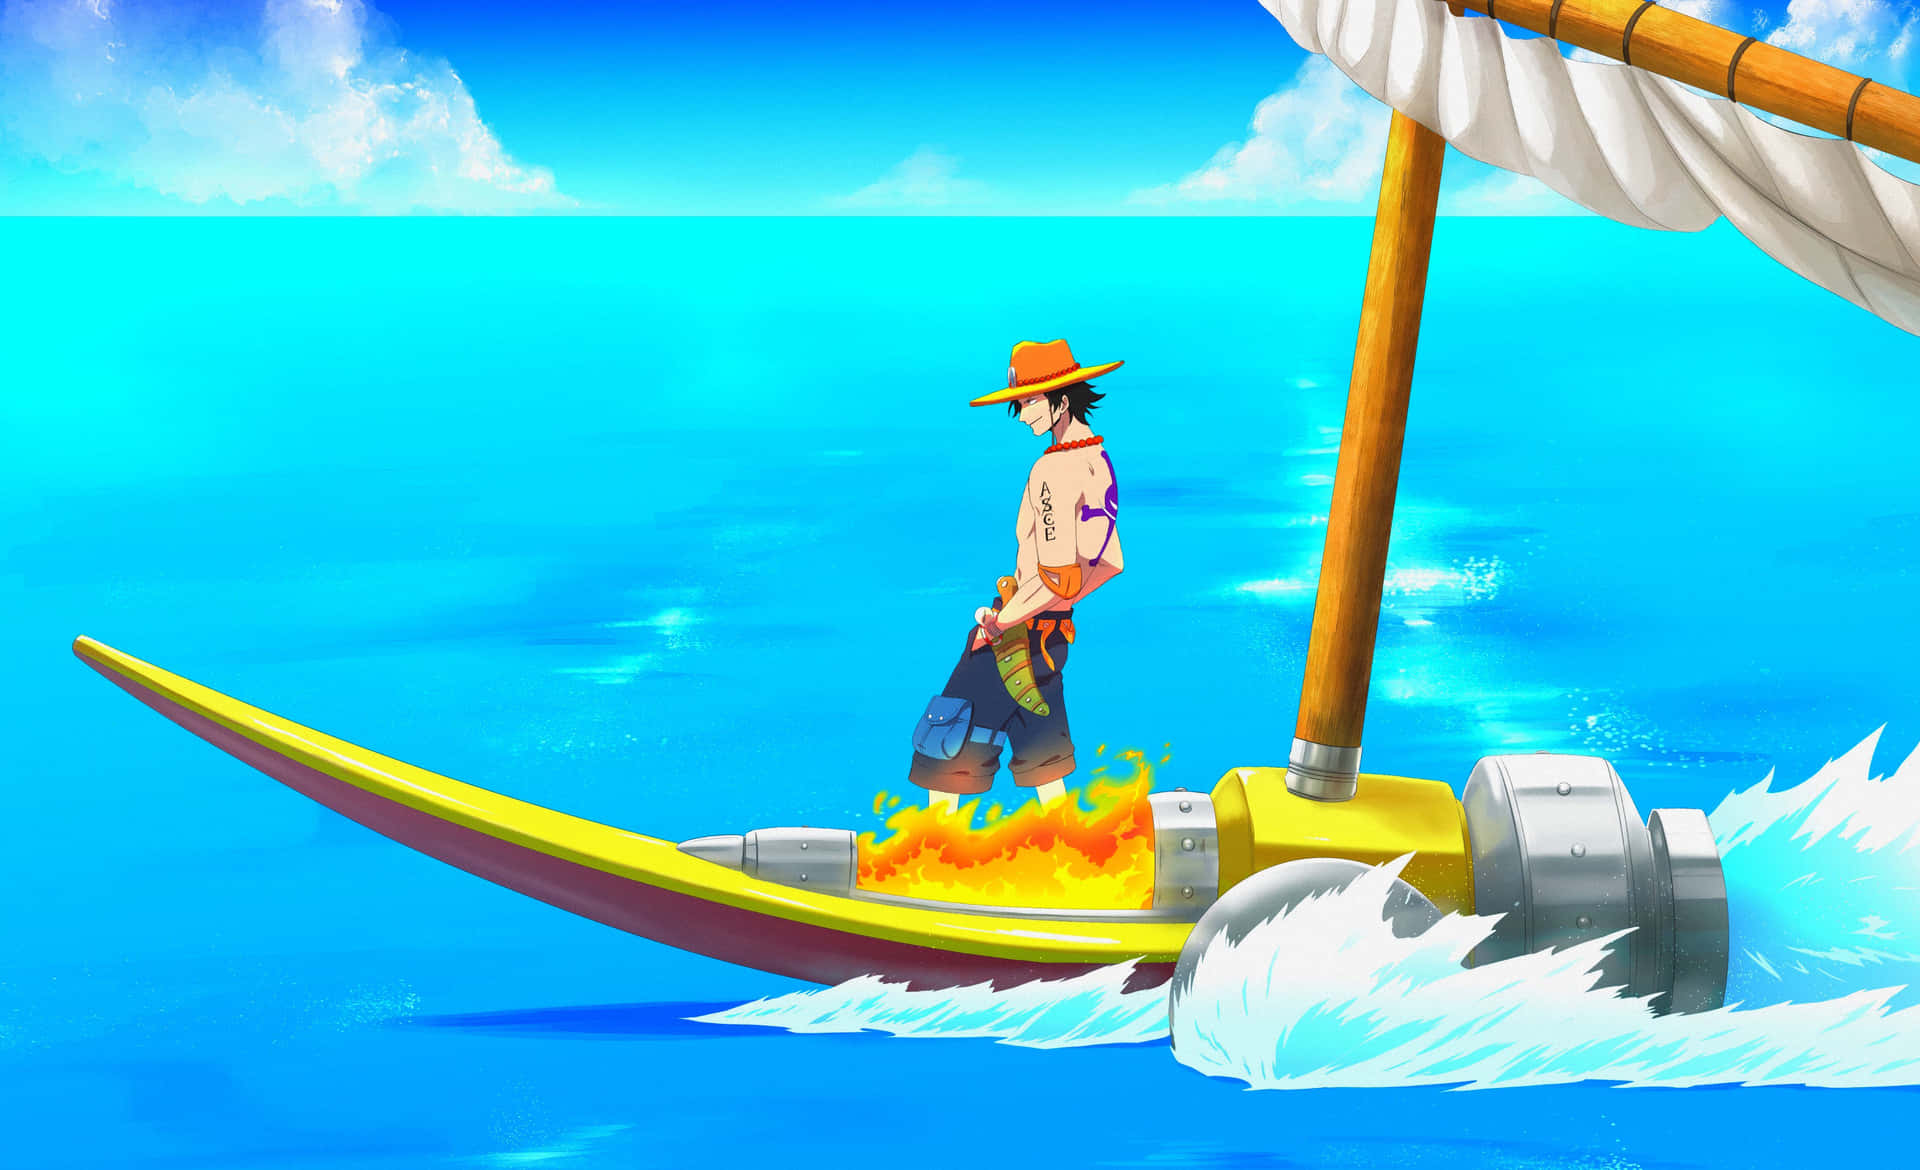 One Piece Character Sailingon Golden Boat Wallpaper